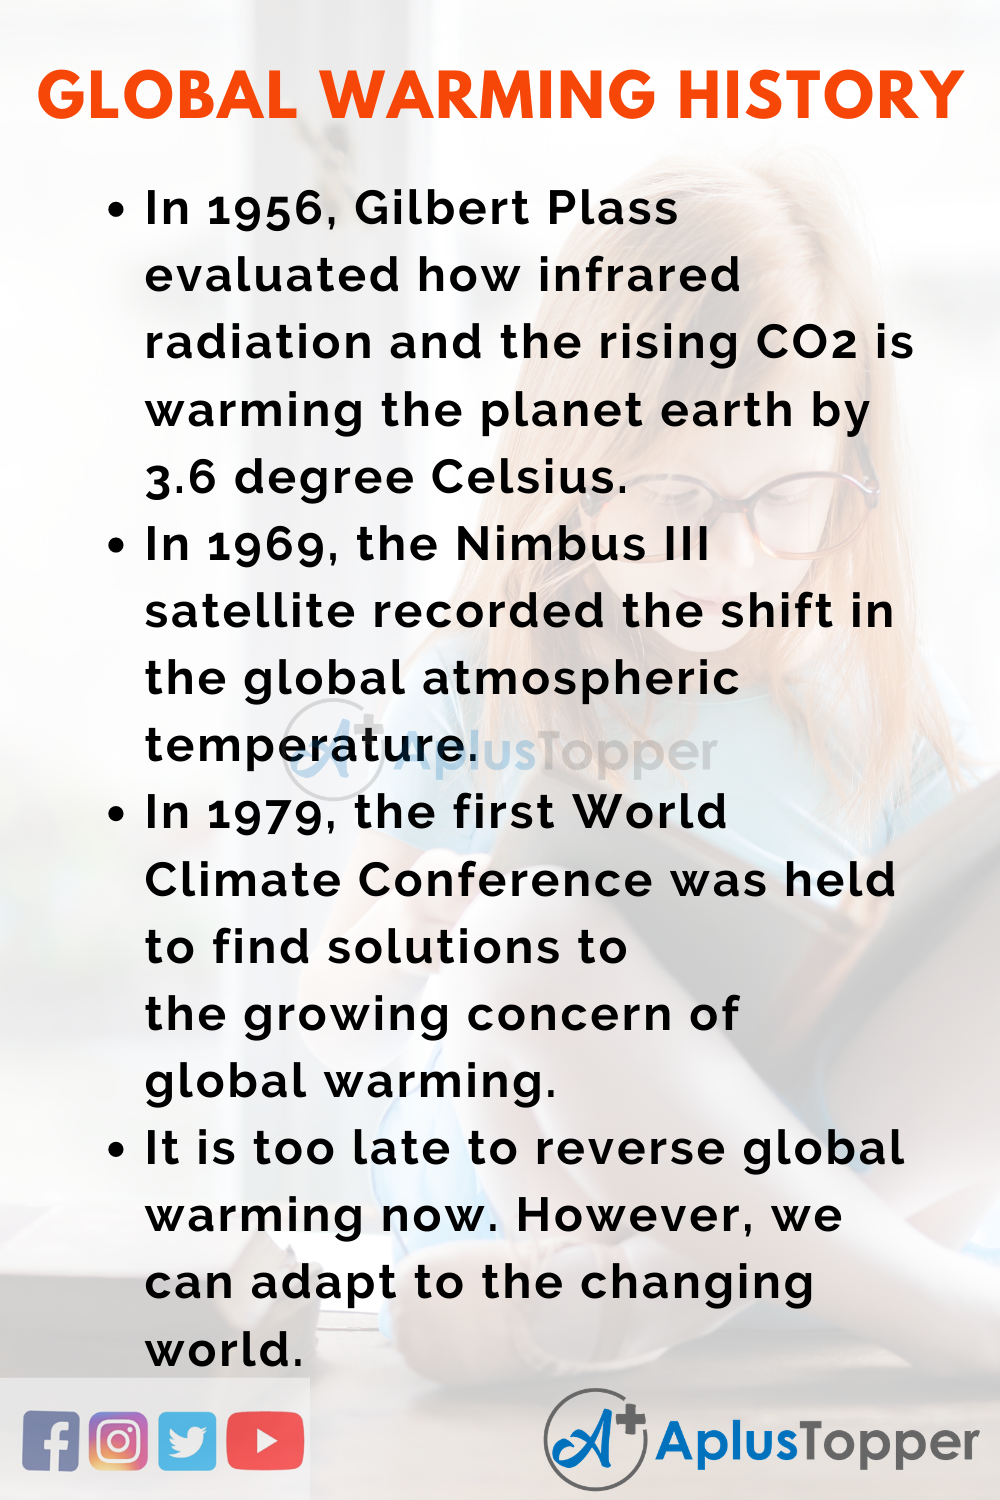 effects of global warming essay pdf